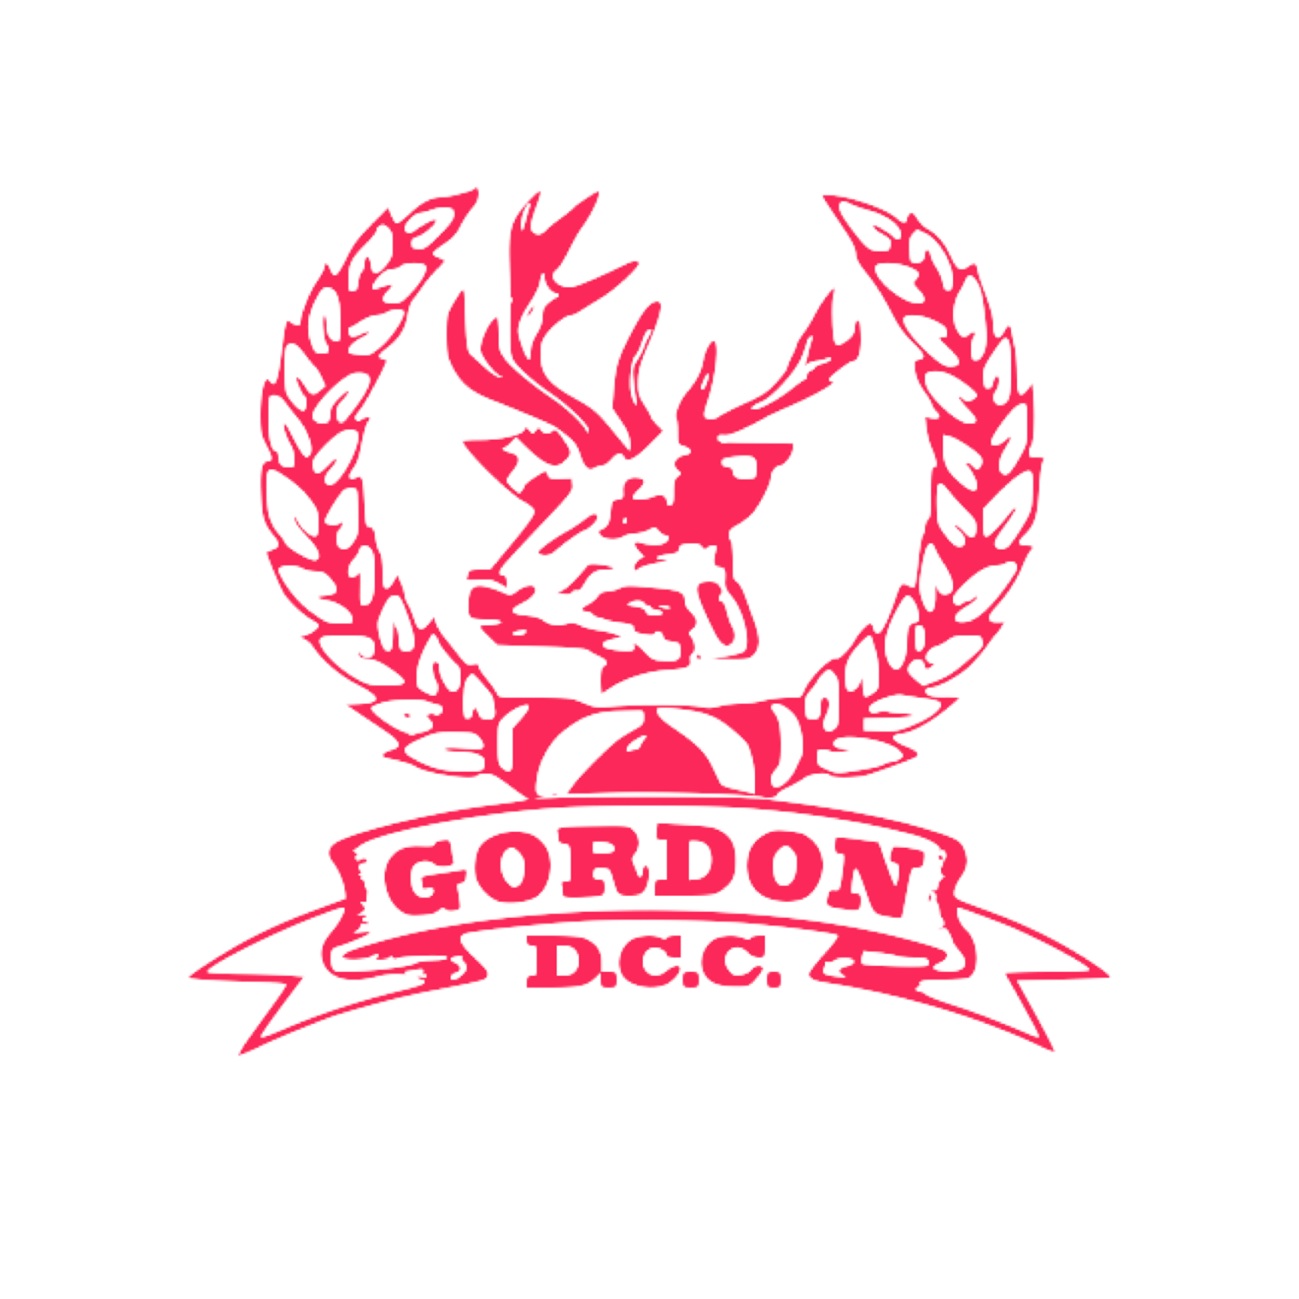 Gordon Women's District Cricket Club